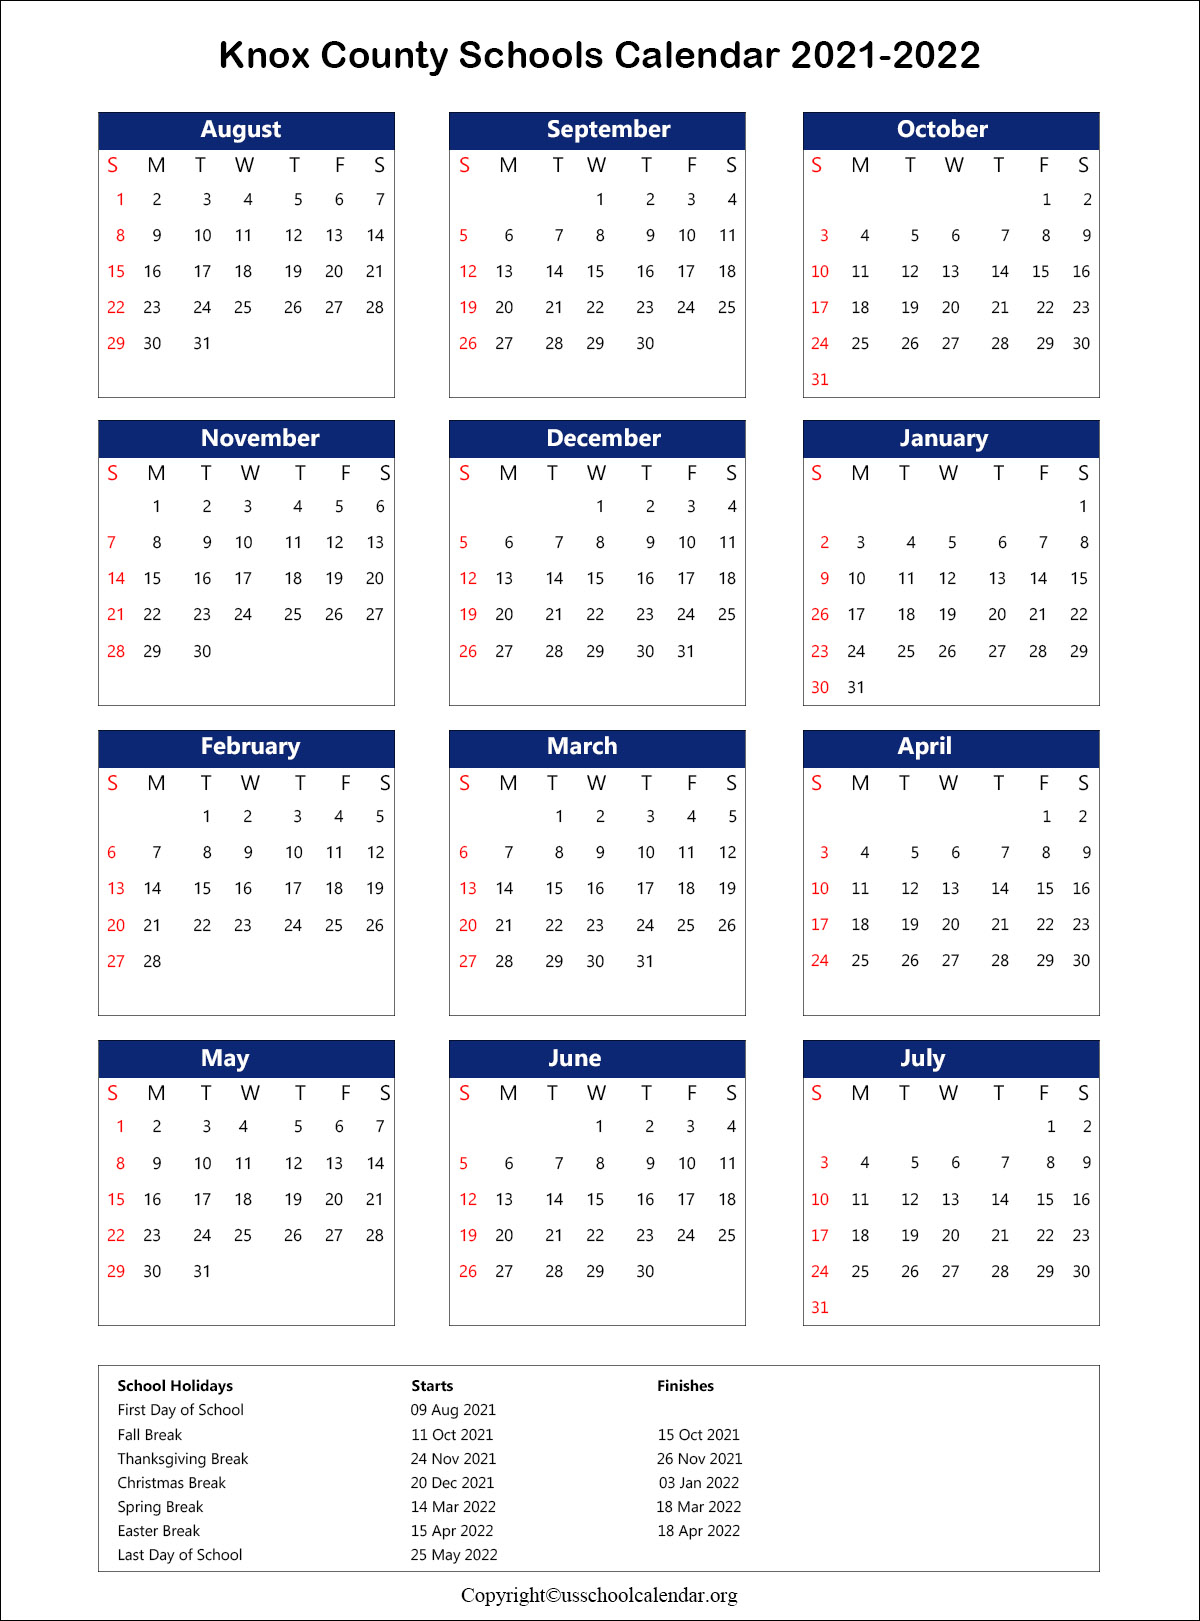 Knox County Schools Calendar With Holidays 2021-2022